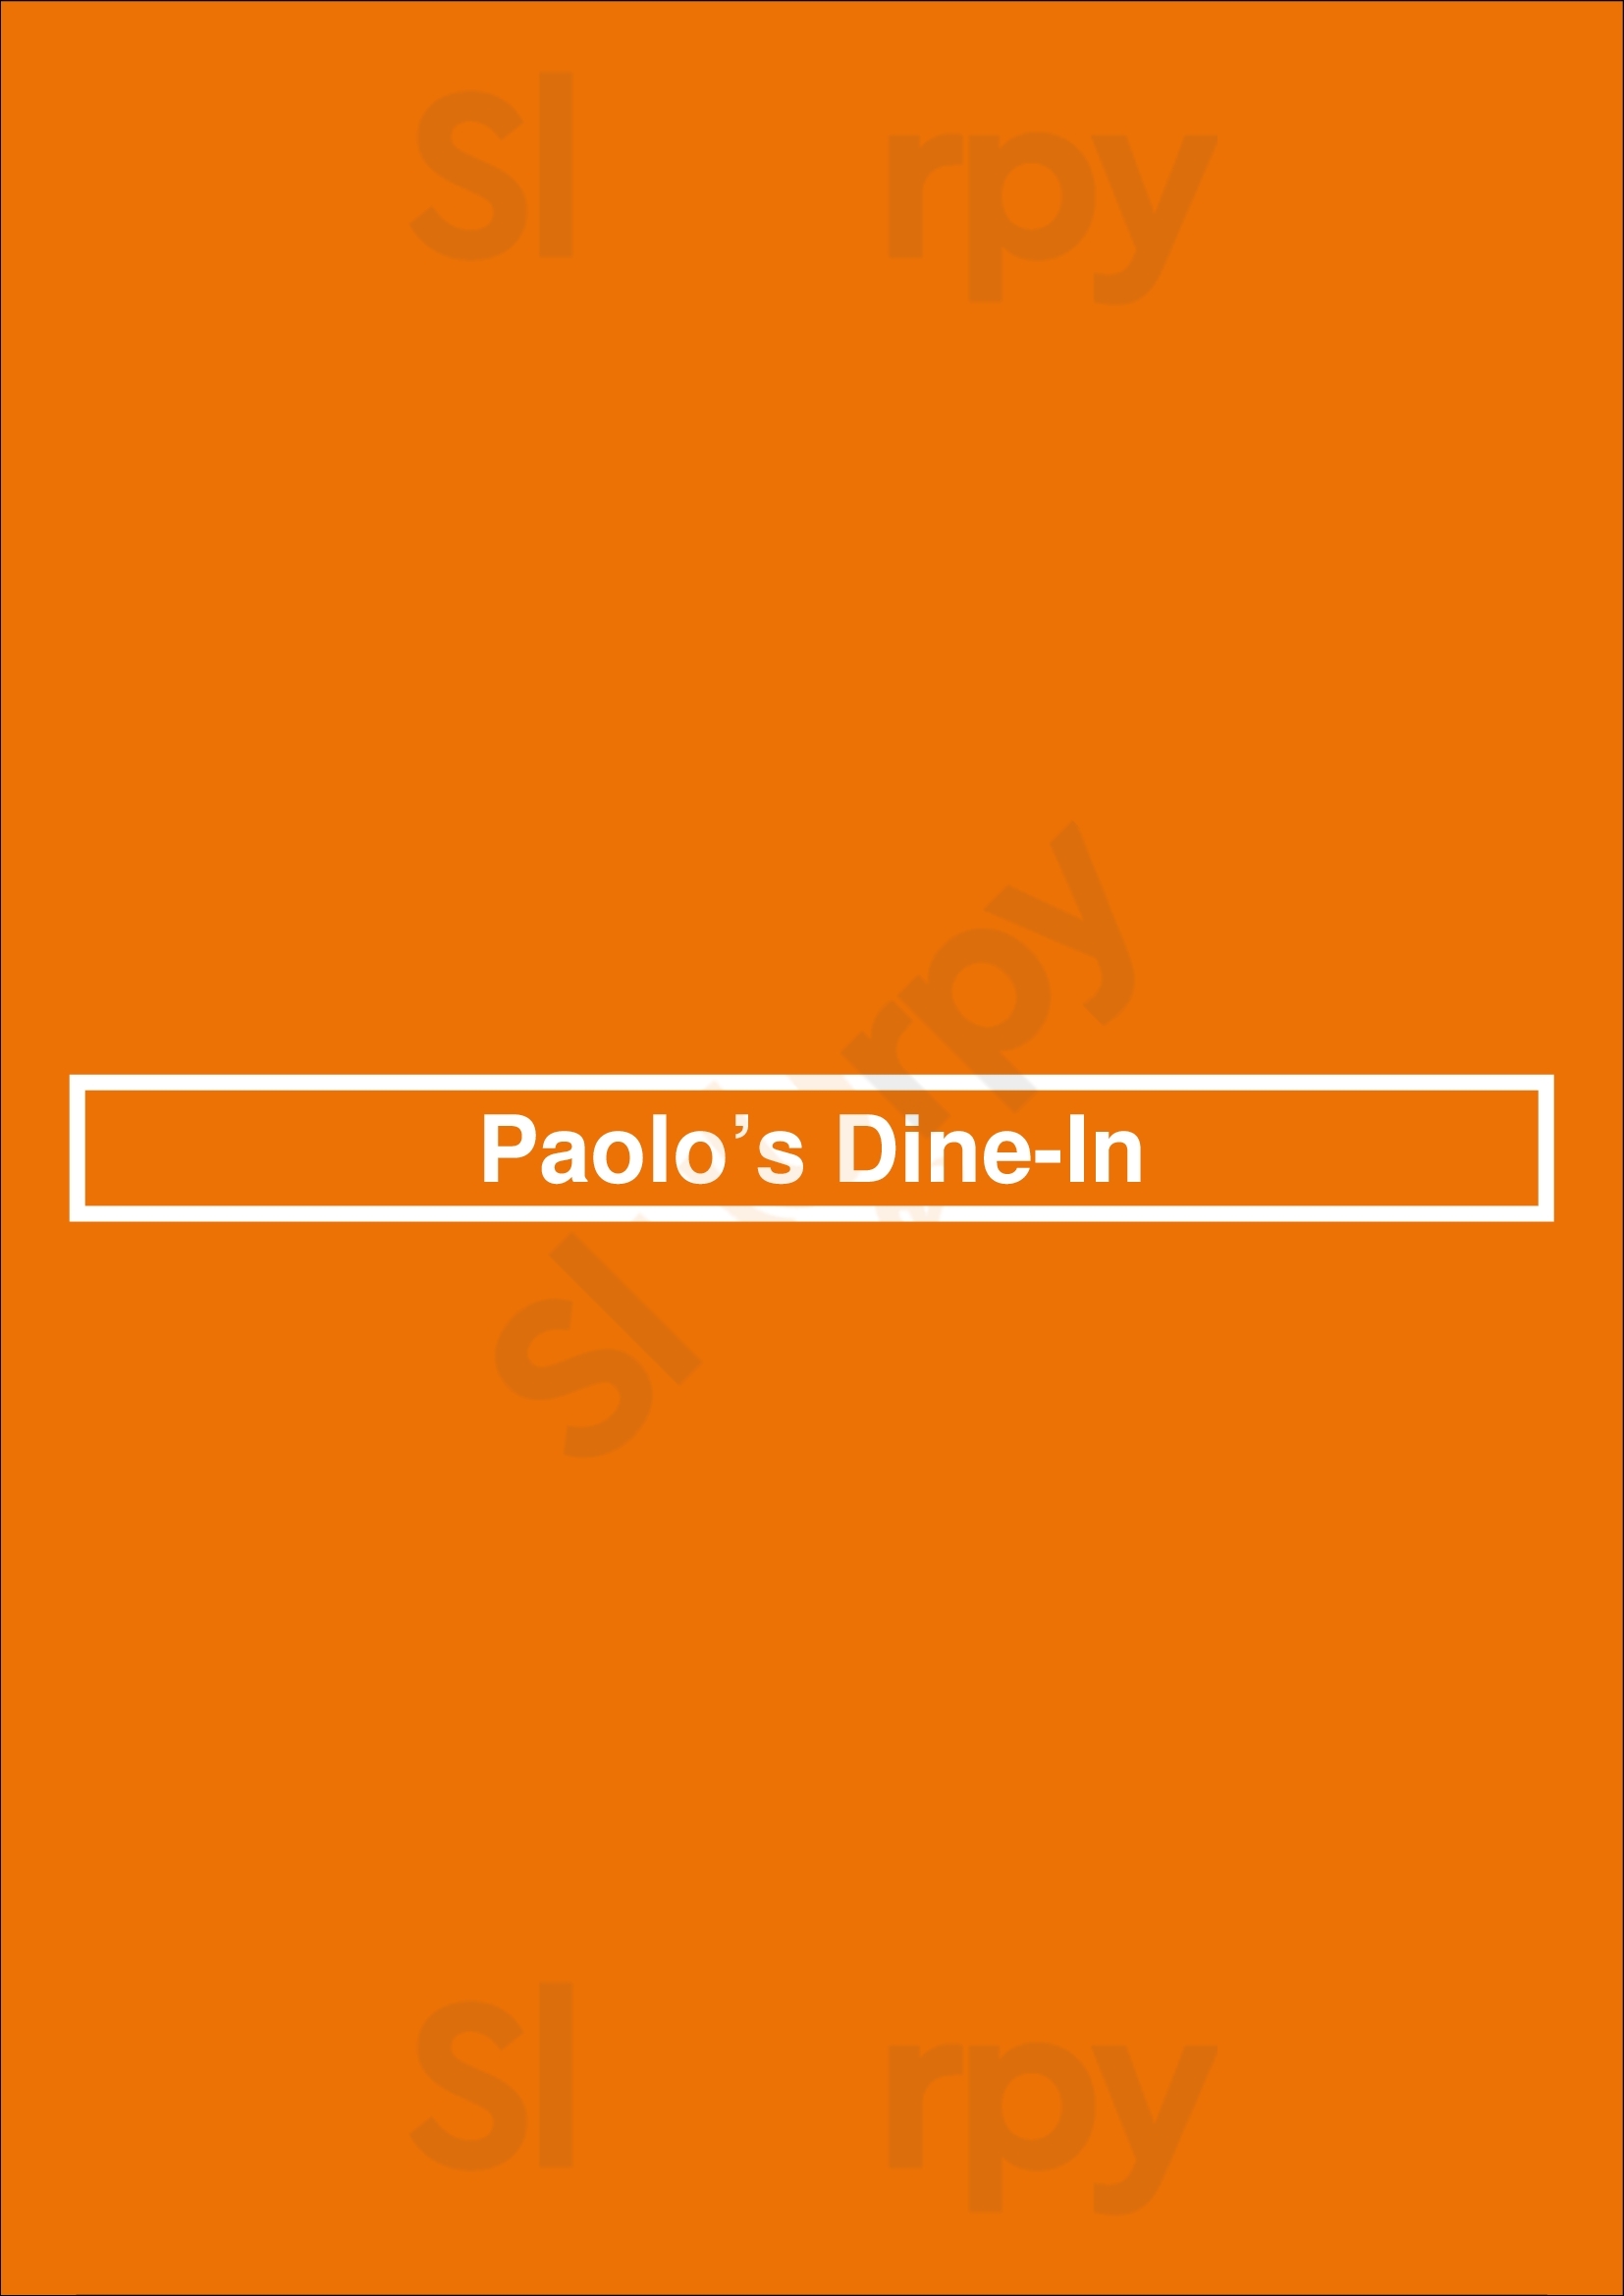 Paolo’s Dine-in Calgary Menu - 1